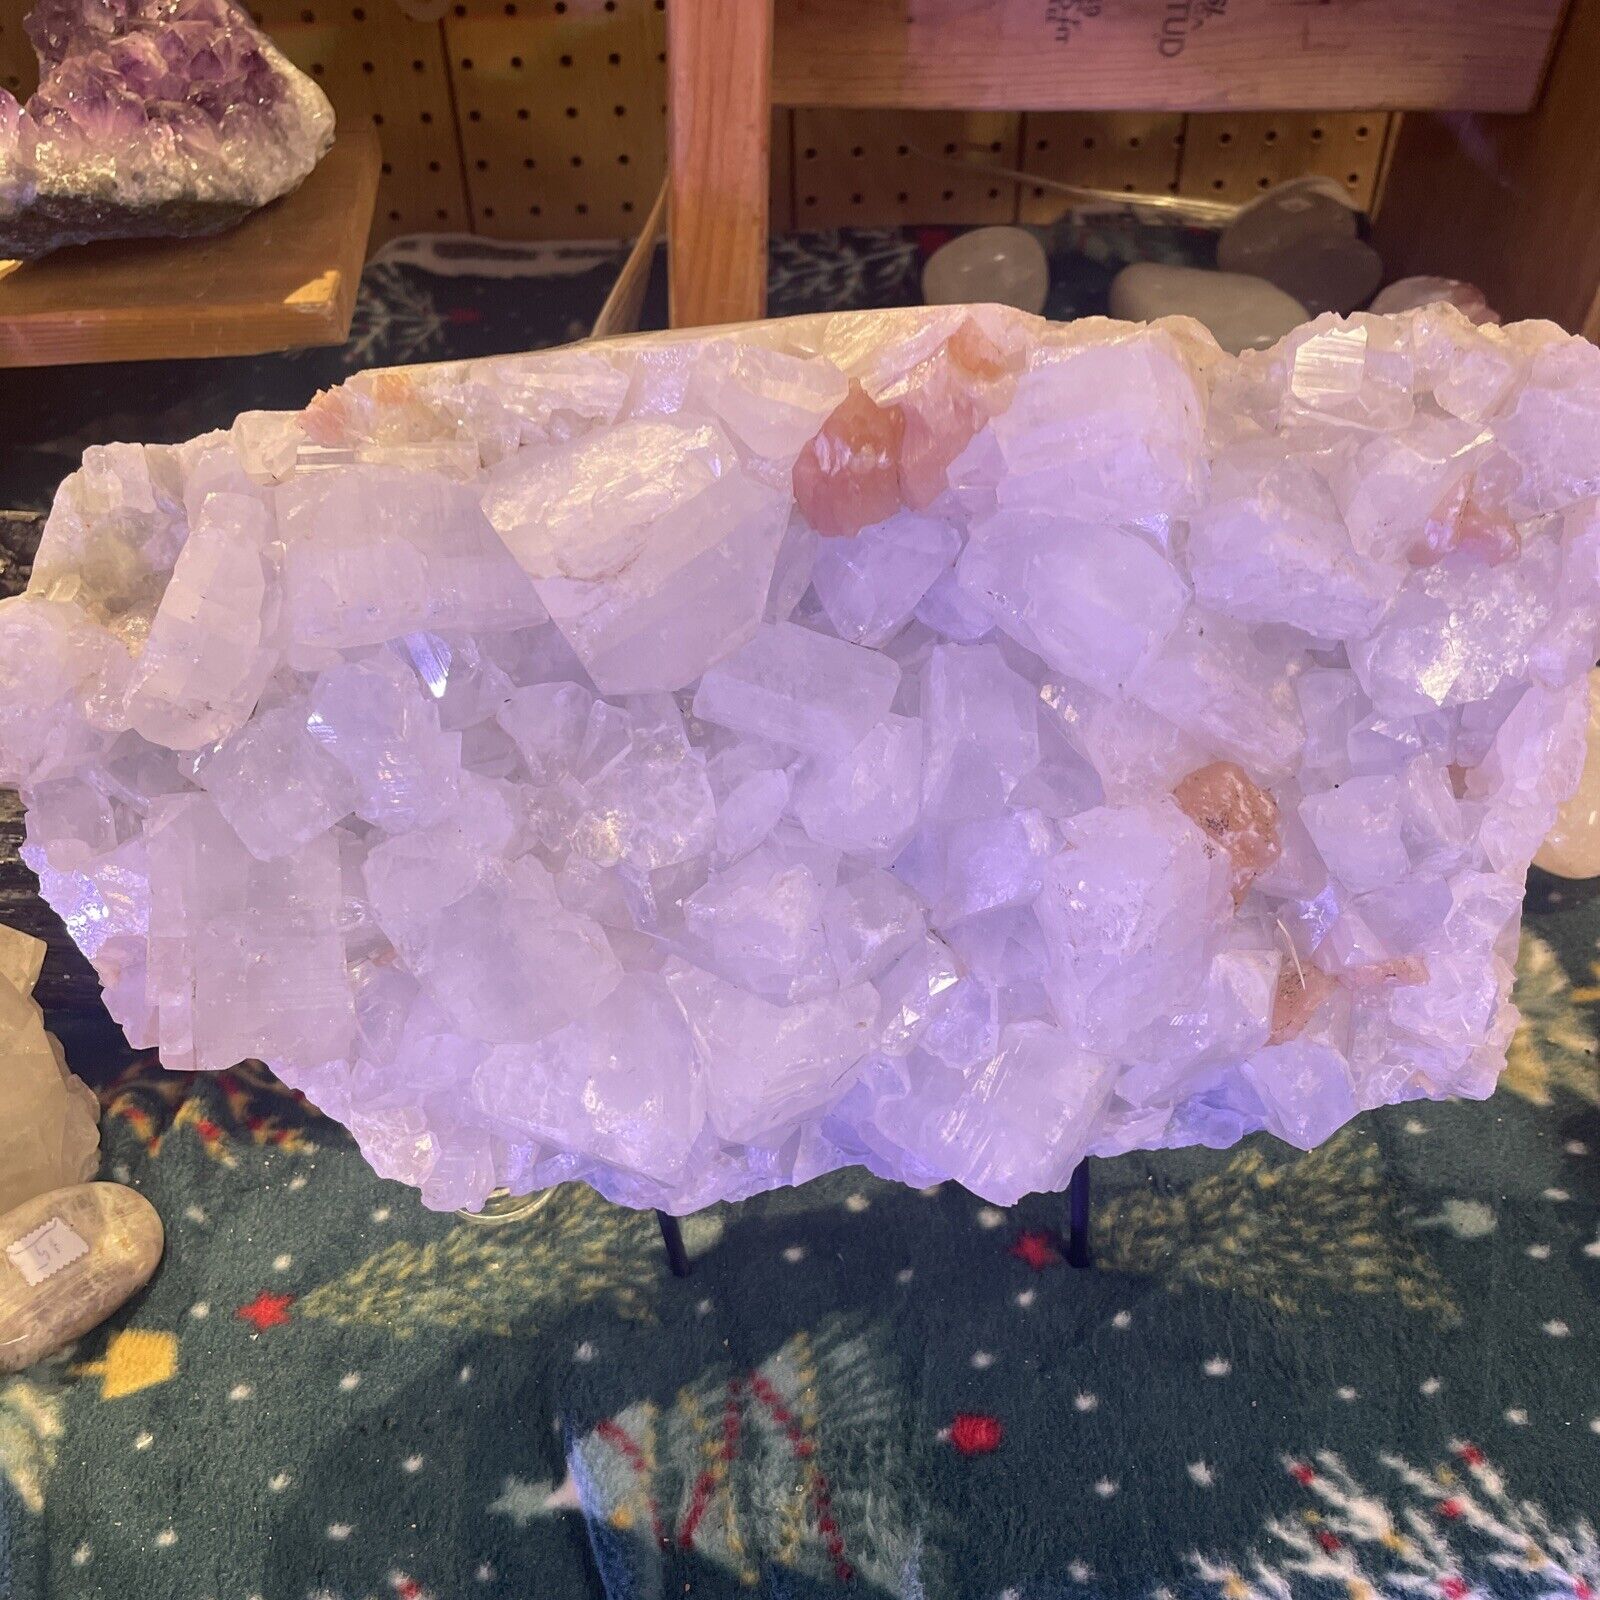 Apophyllite & Stilbite Crystal From The Himalaya Mountains